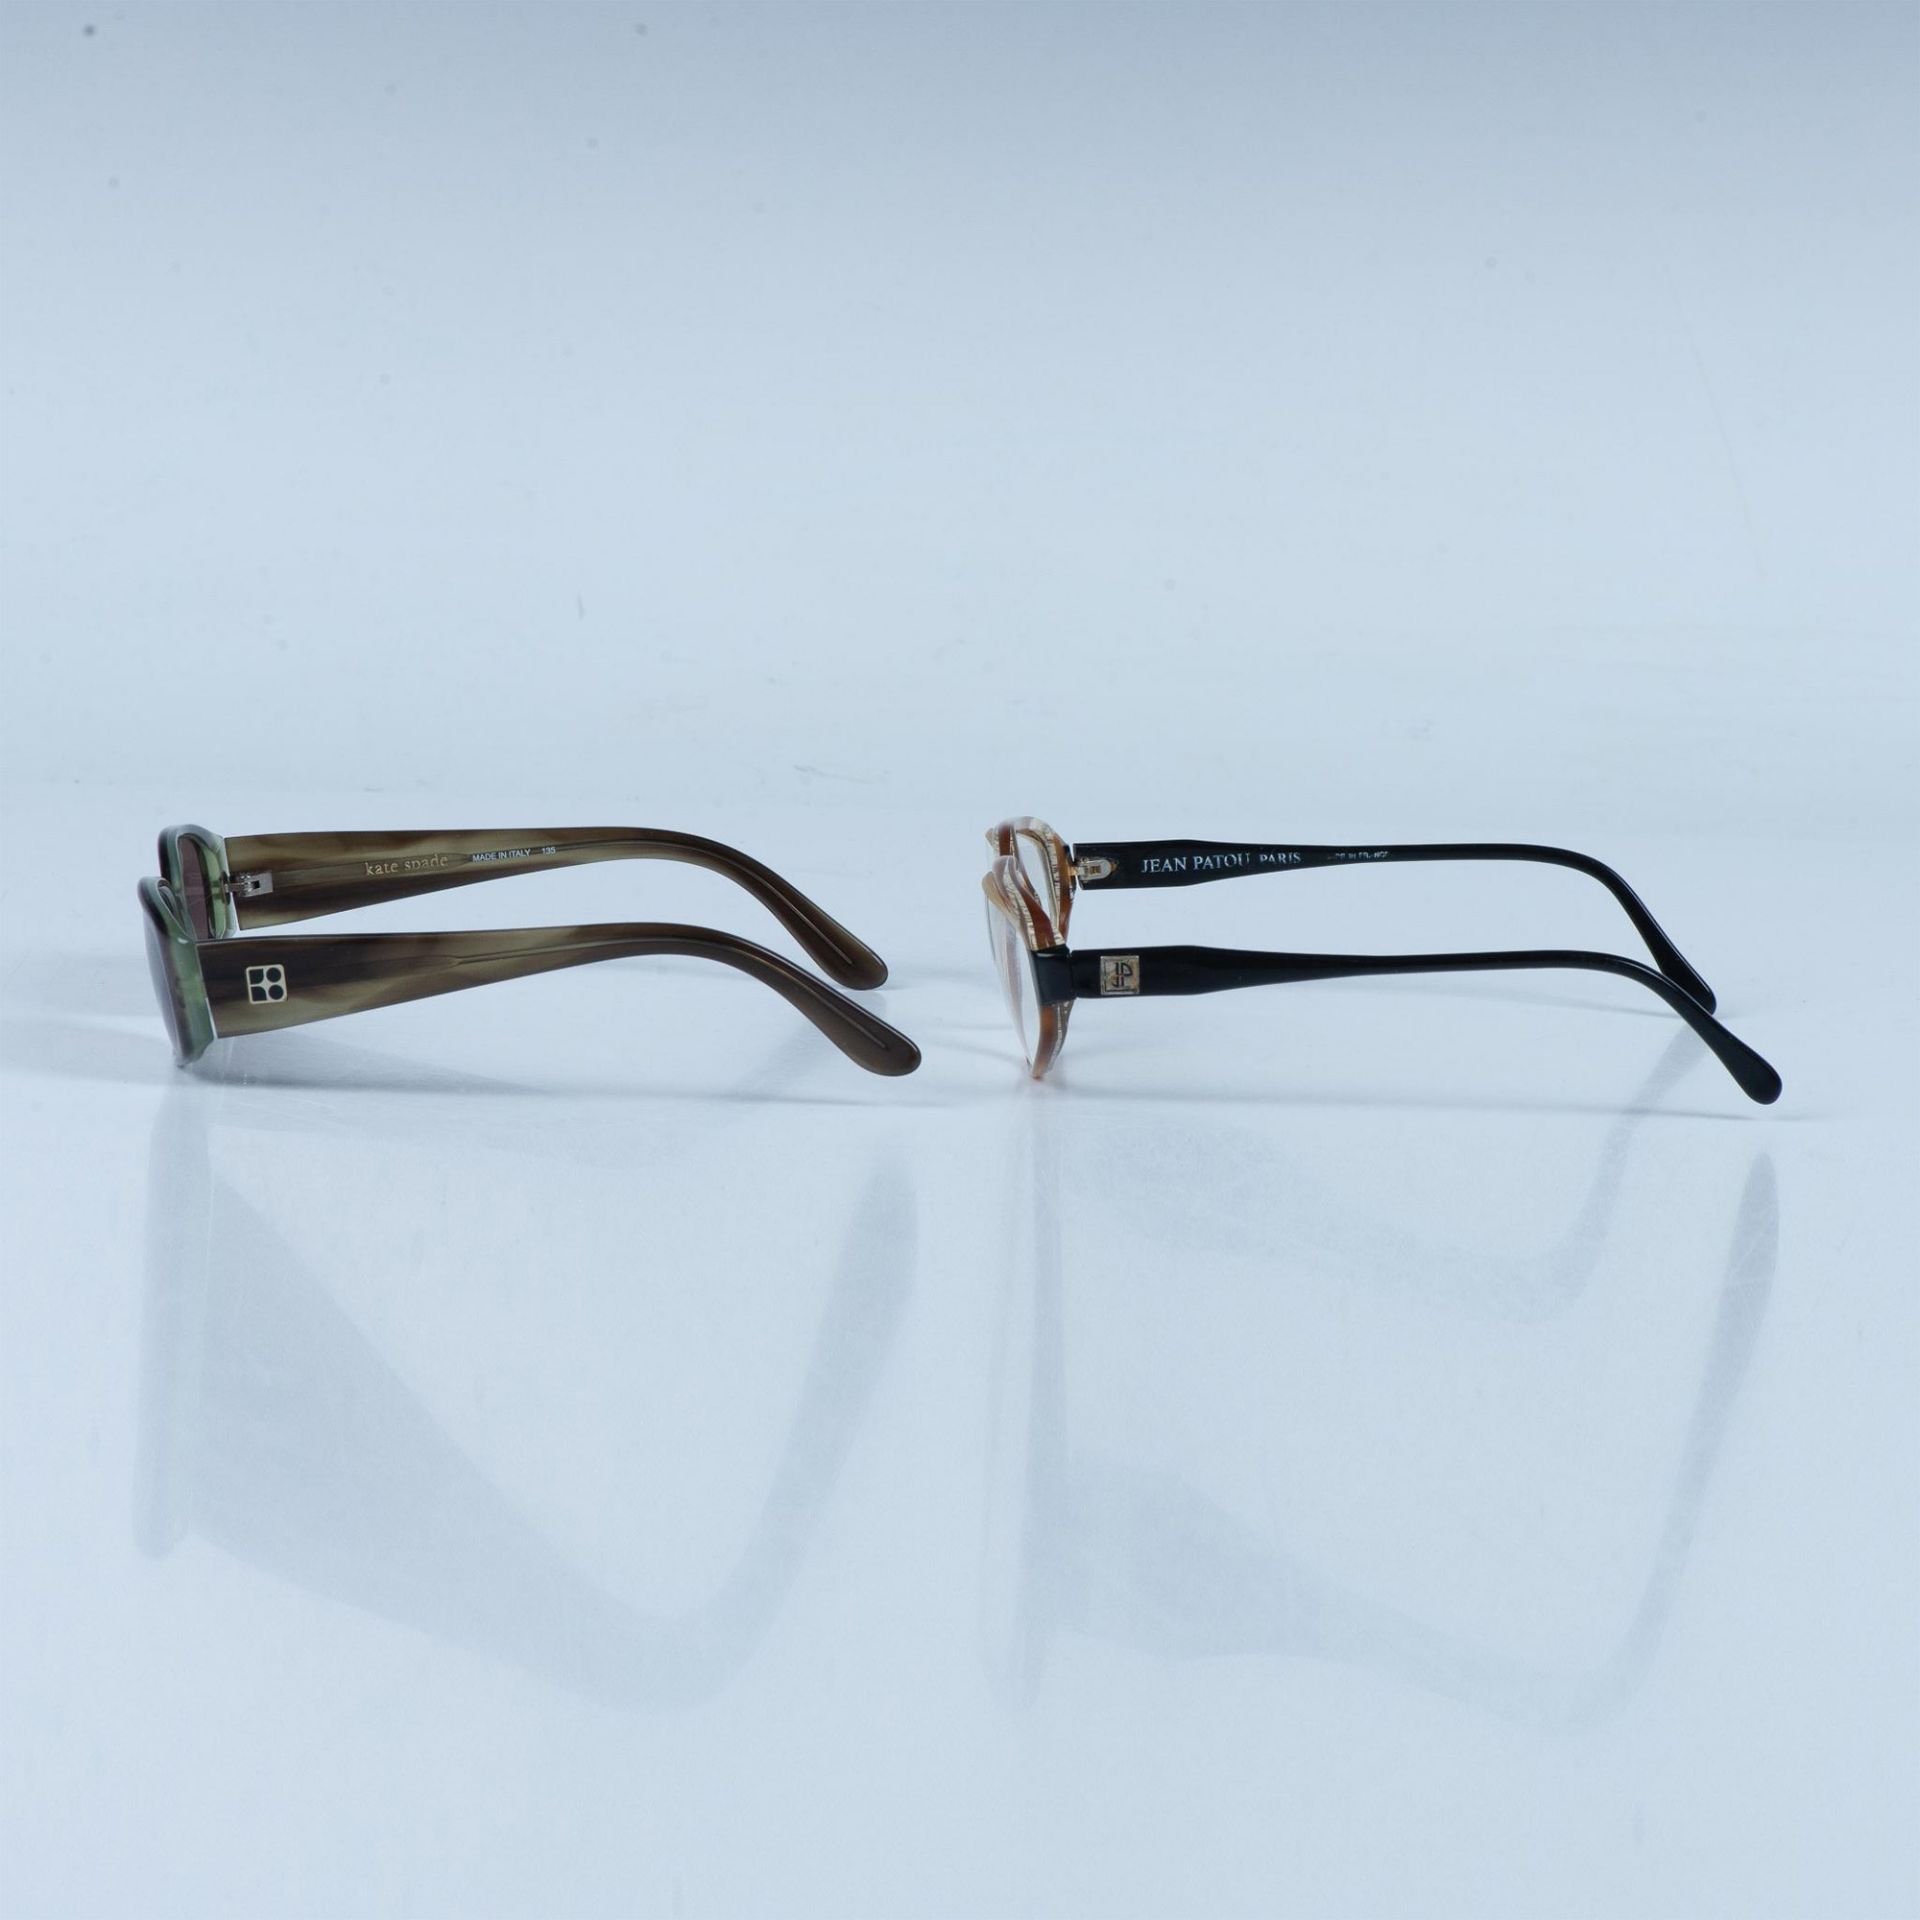 2pc Designer Eyeglass Frames - Image 2 of 11